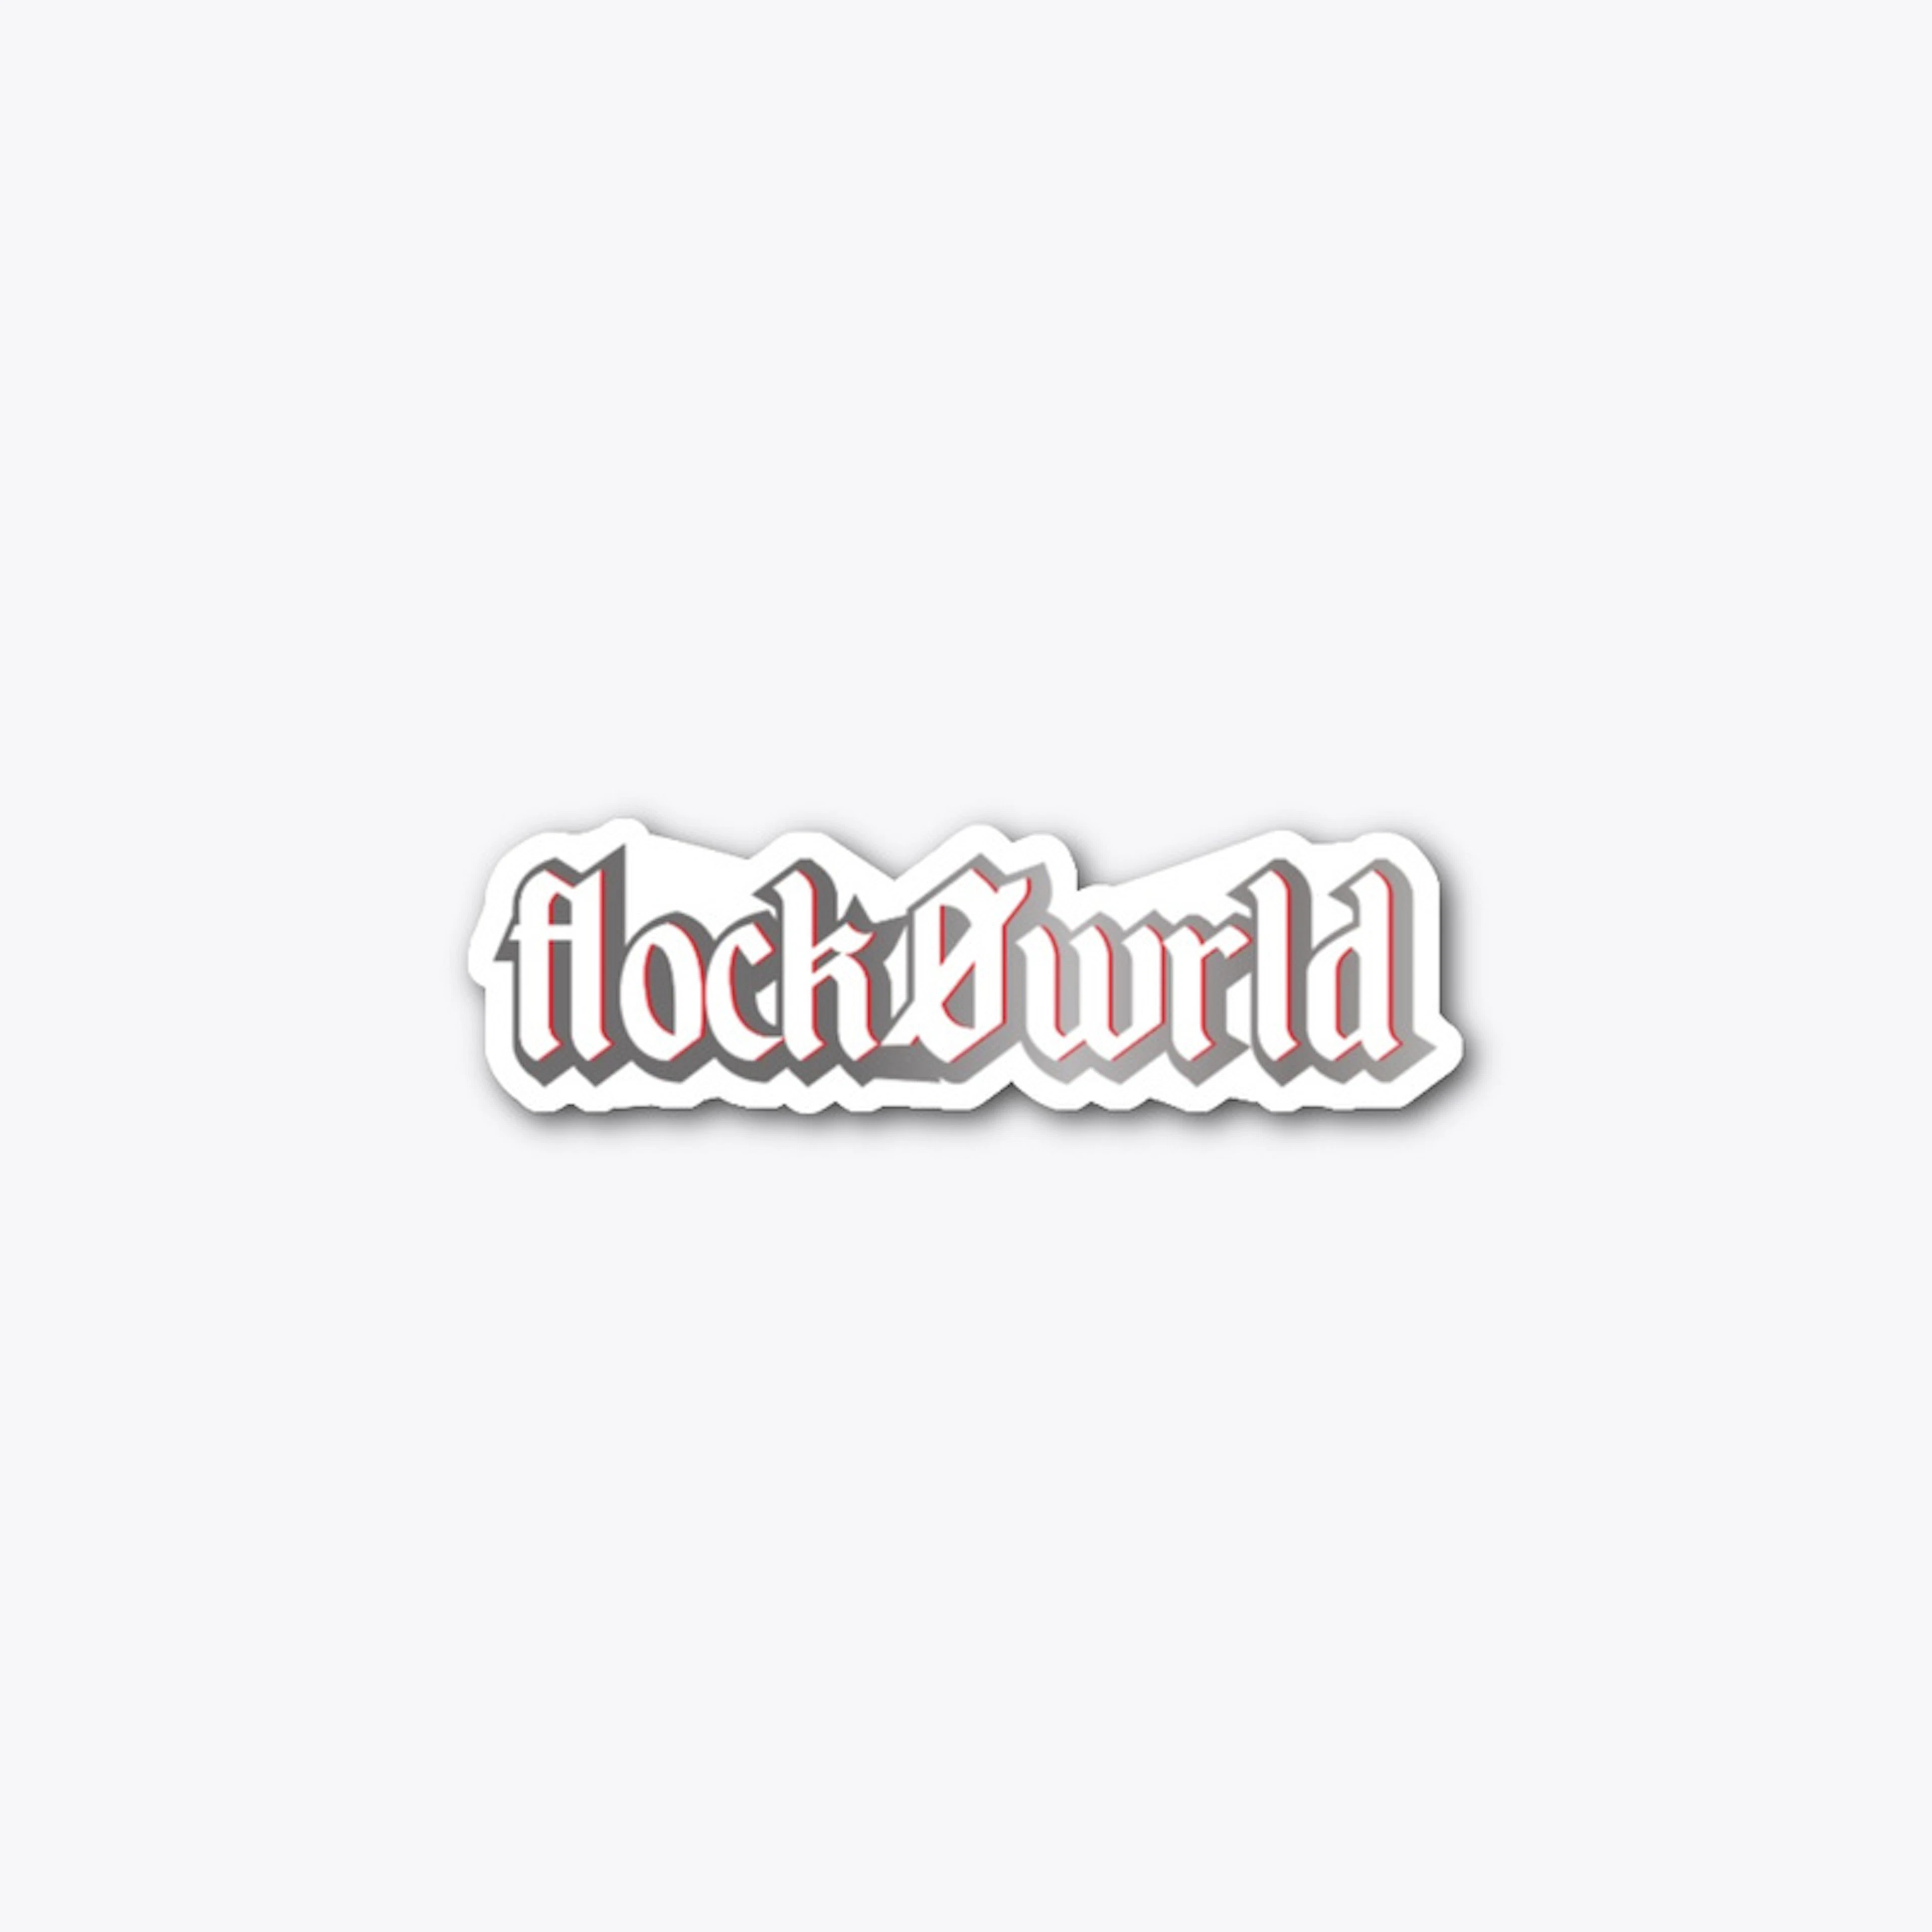 FlockoWrld Sticker